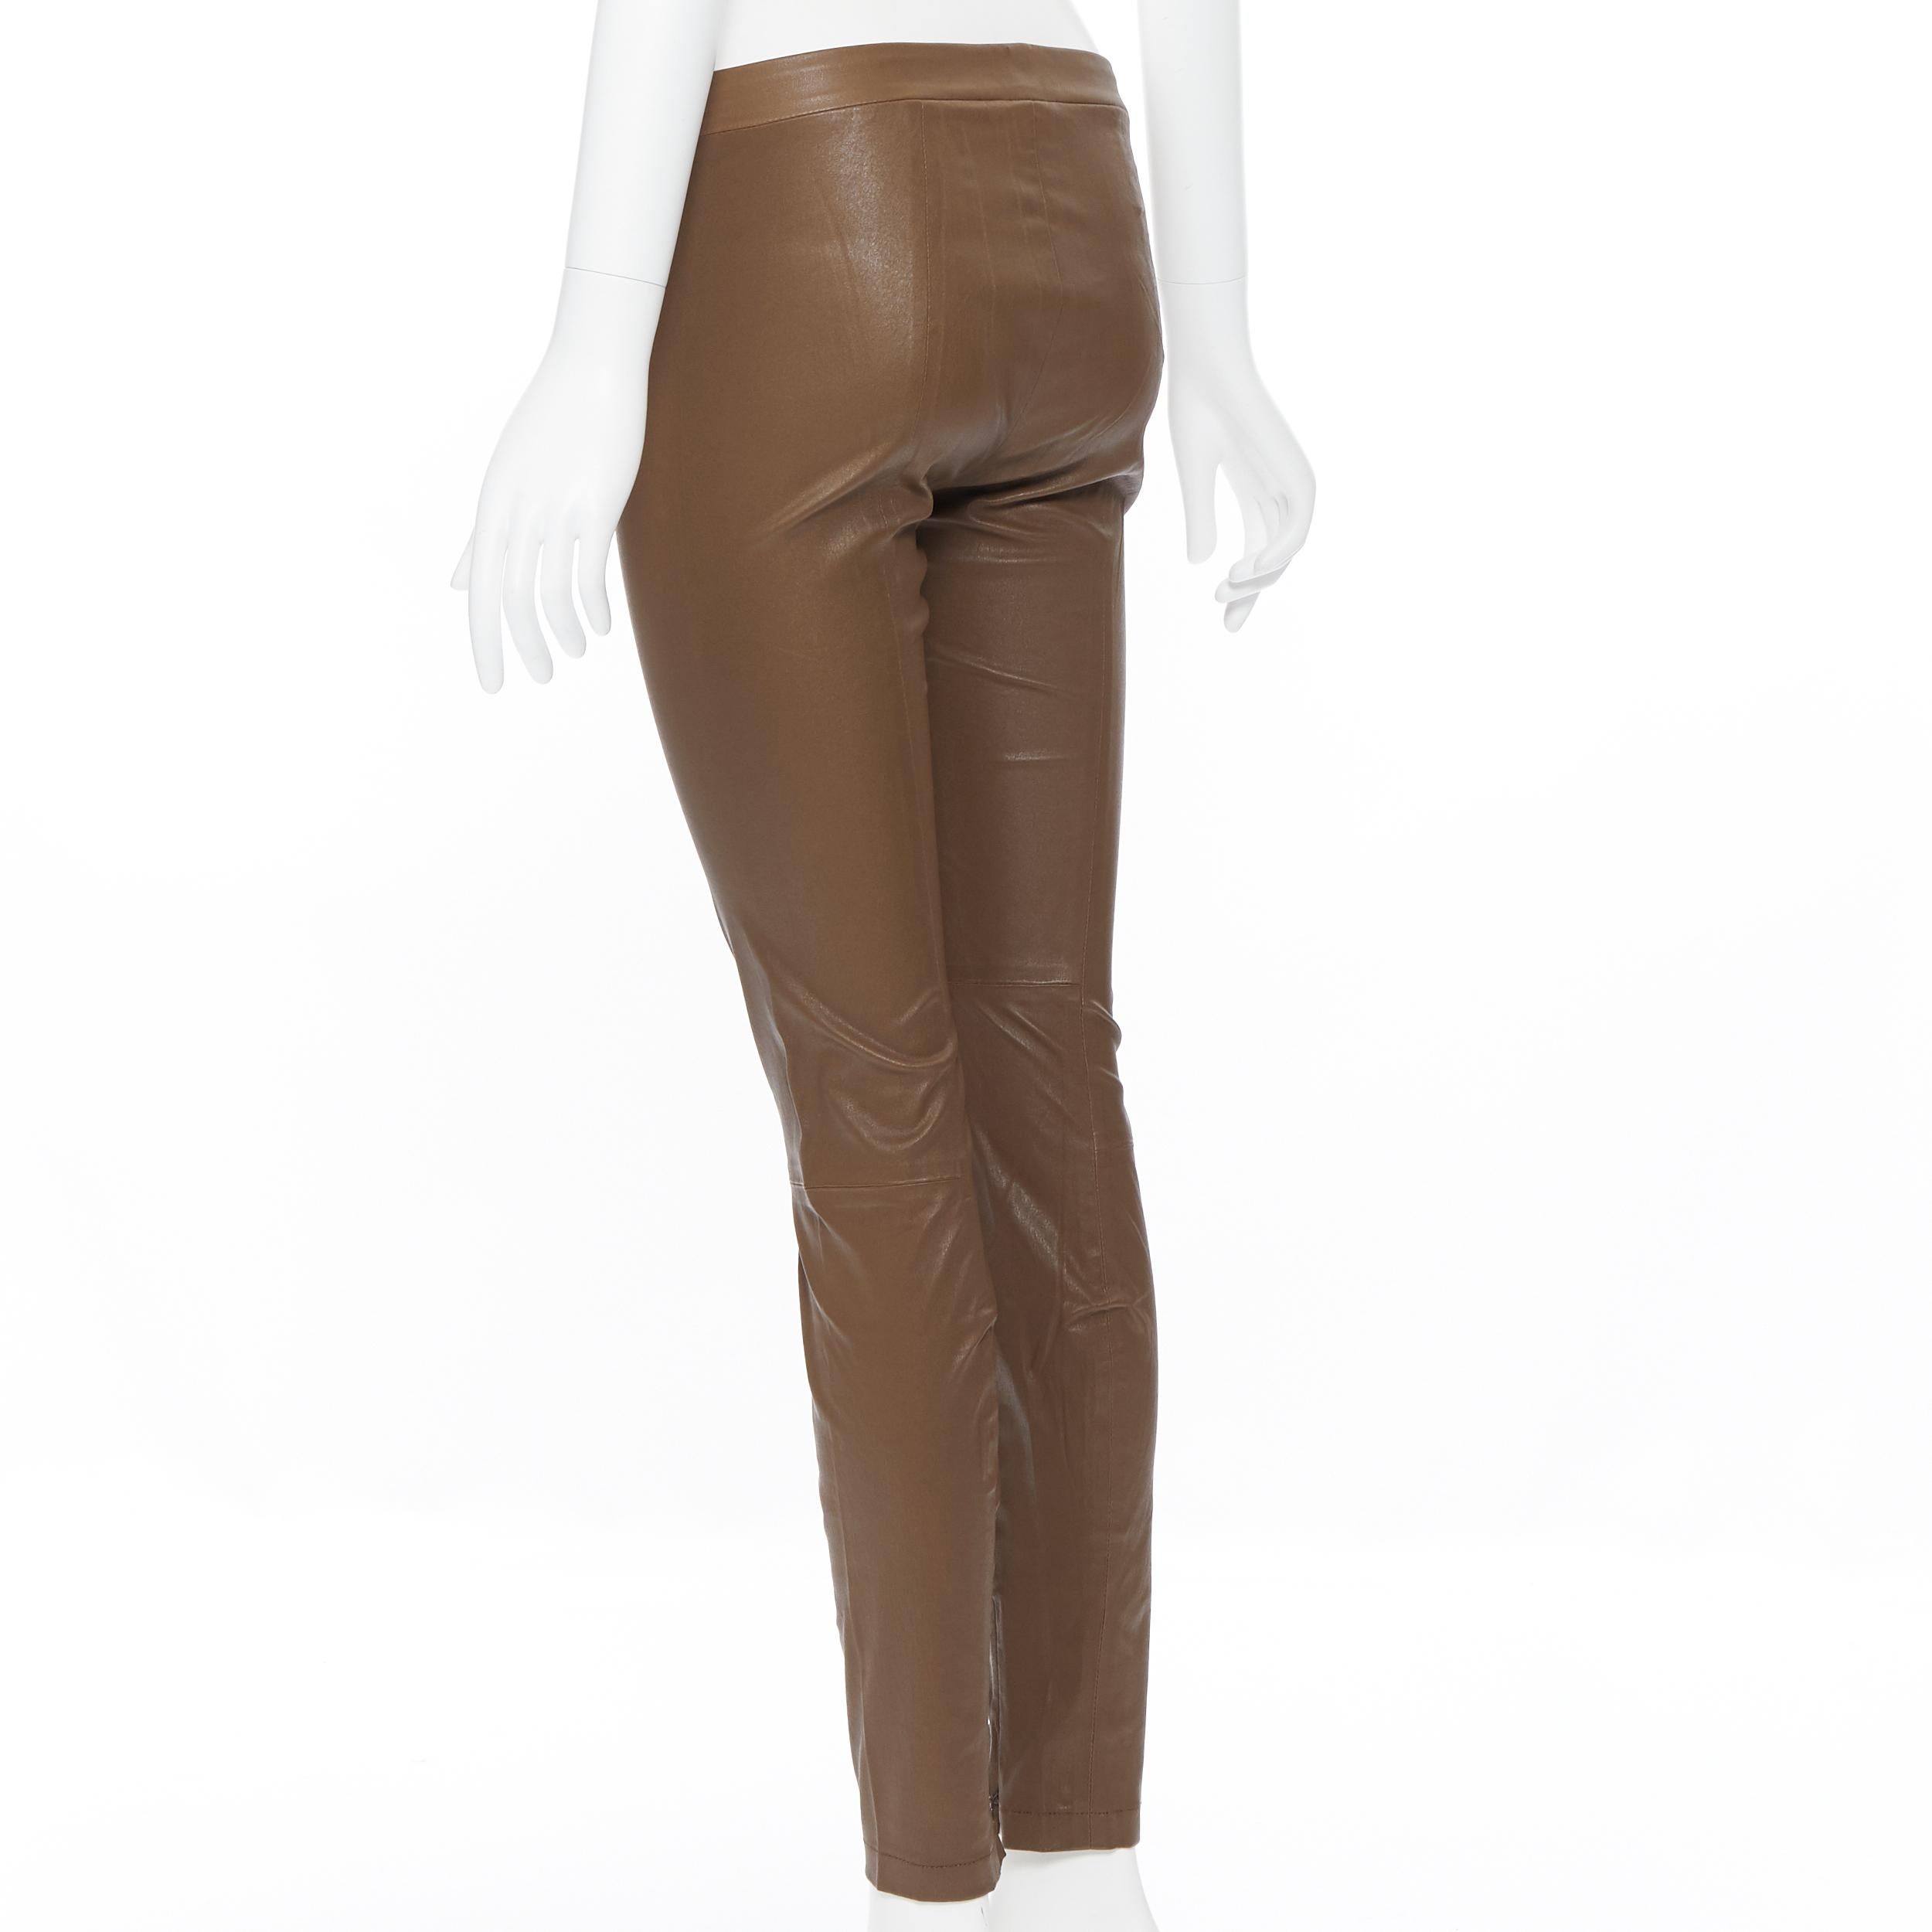 VINCE 100% leather tan brown minimal stretchy skinny leg pants XS 1